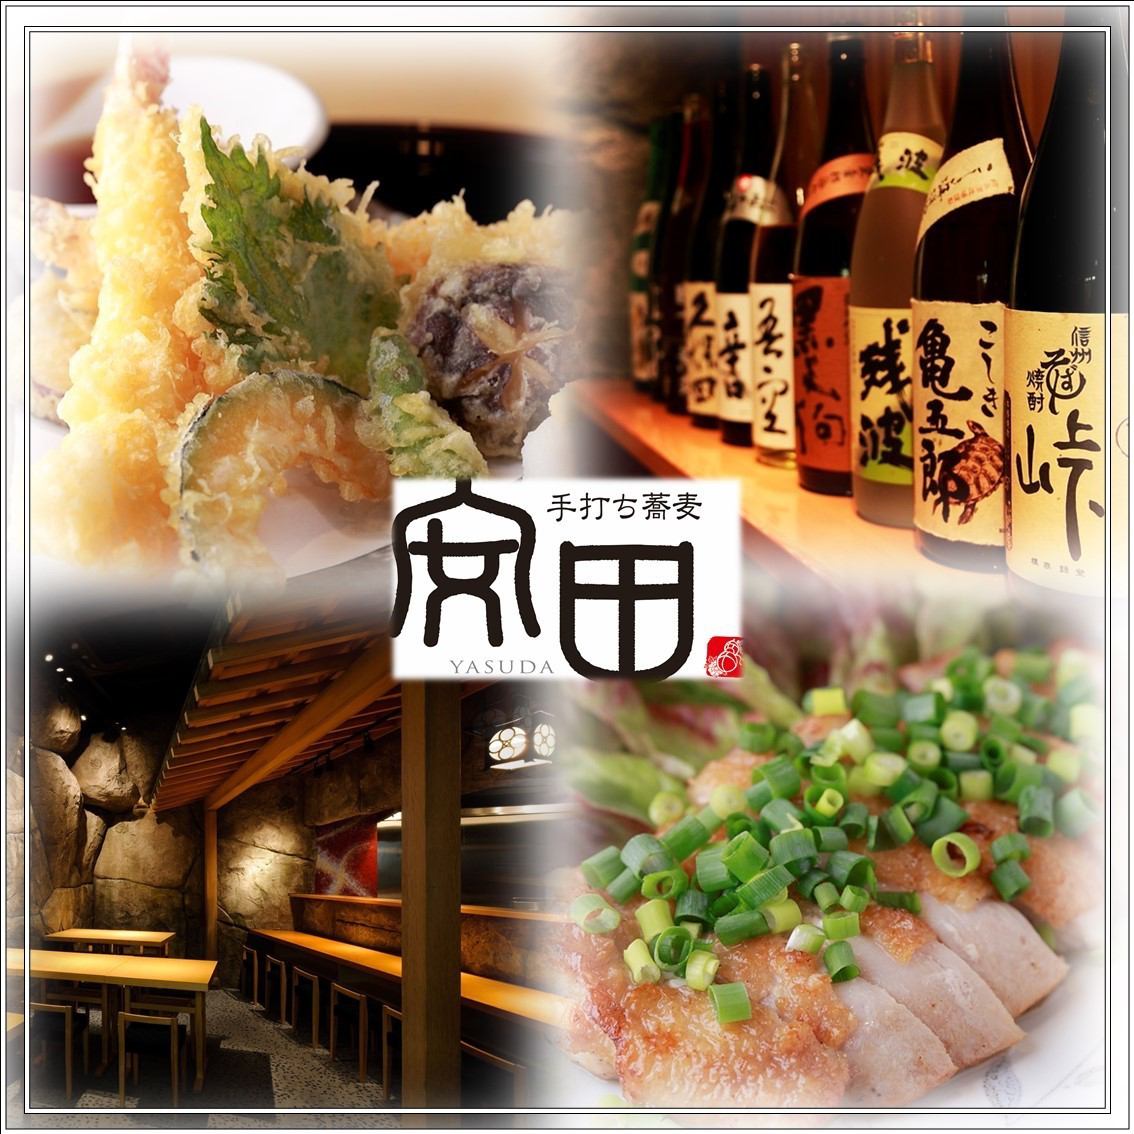 Ichikawa“Yasuda”的热门私人酒吧将接受无限畅饮饮料，宴会和包机服务。还请访问女子协会！